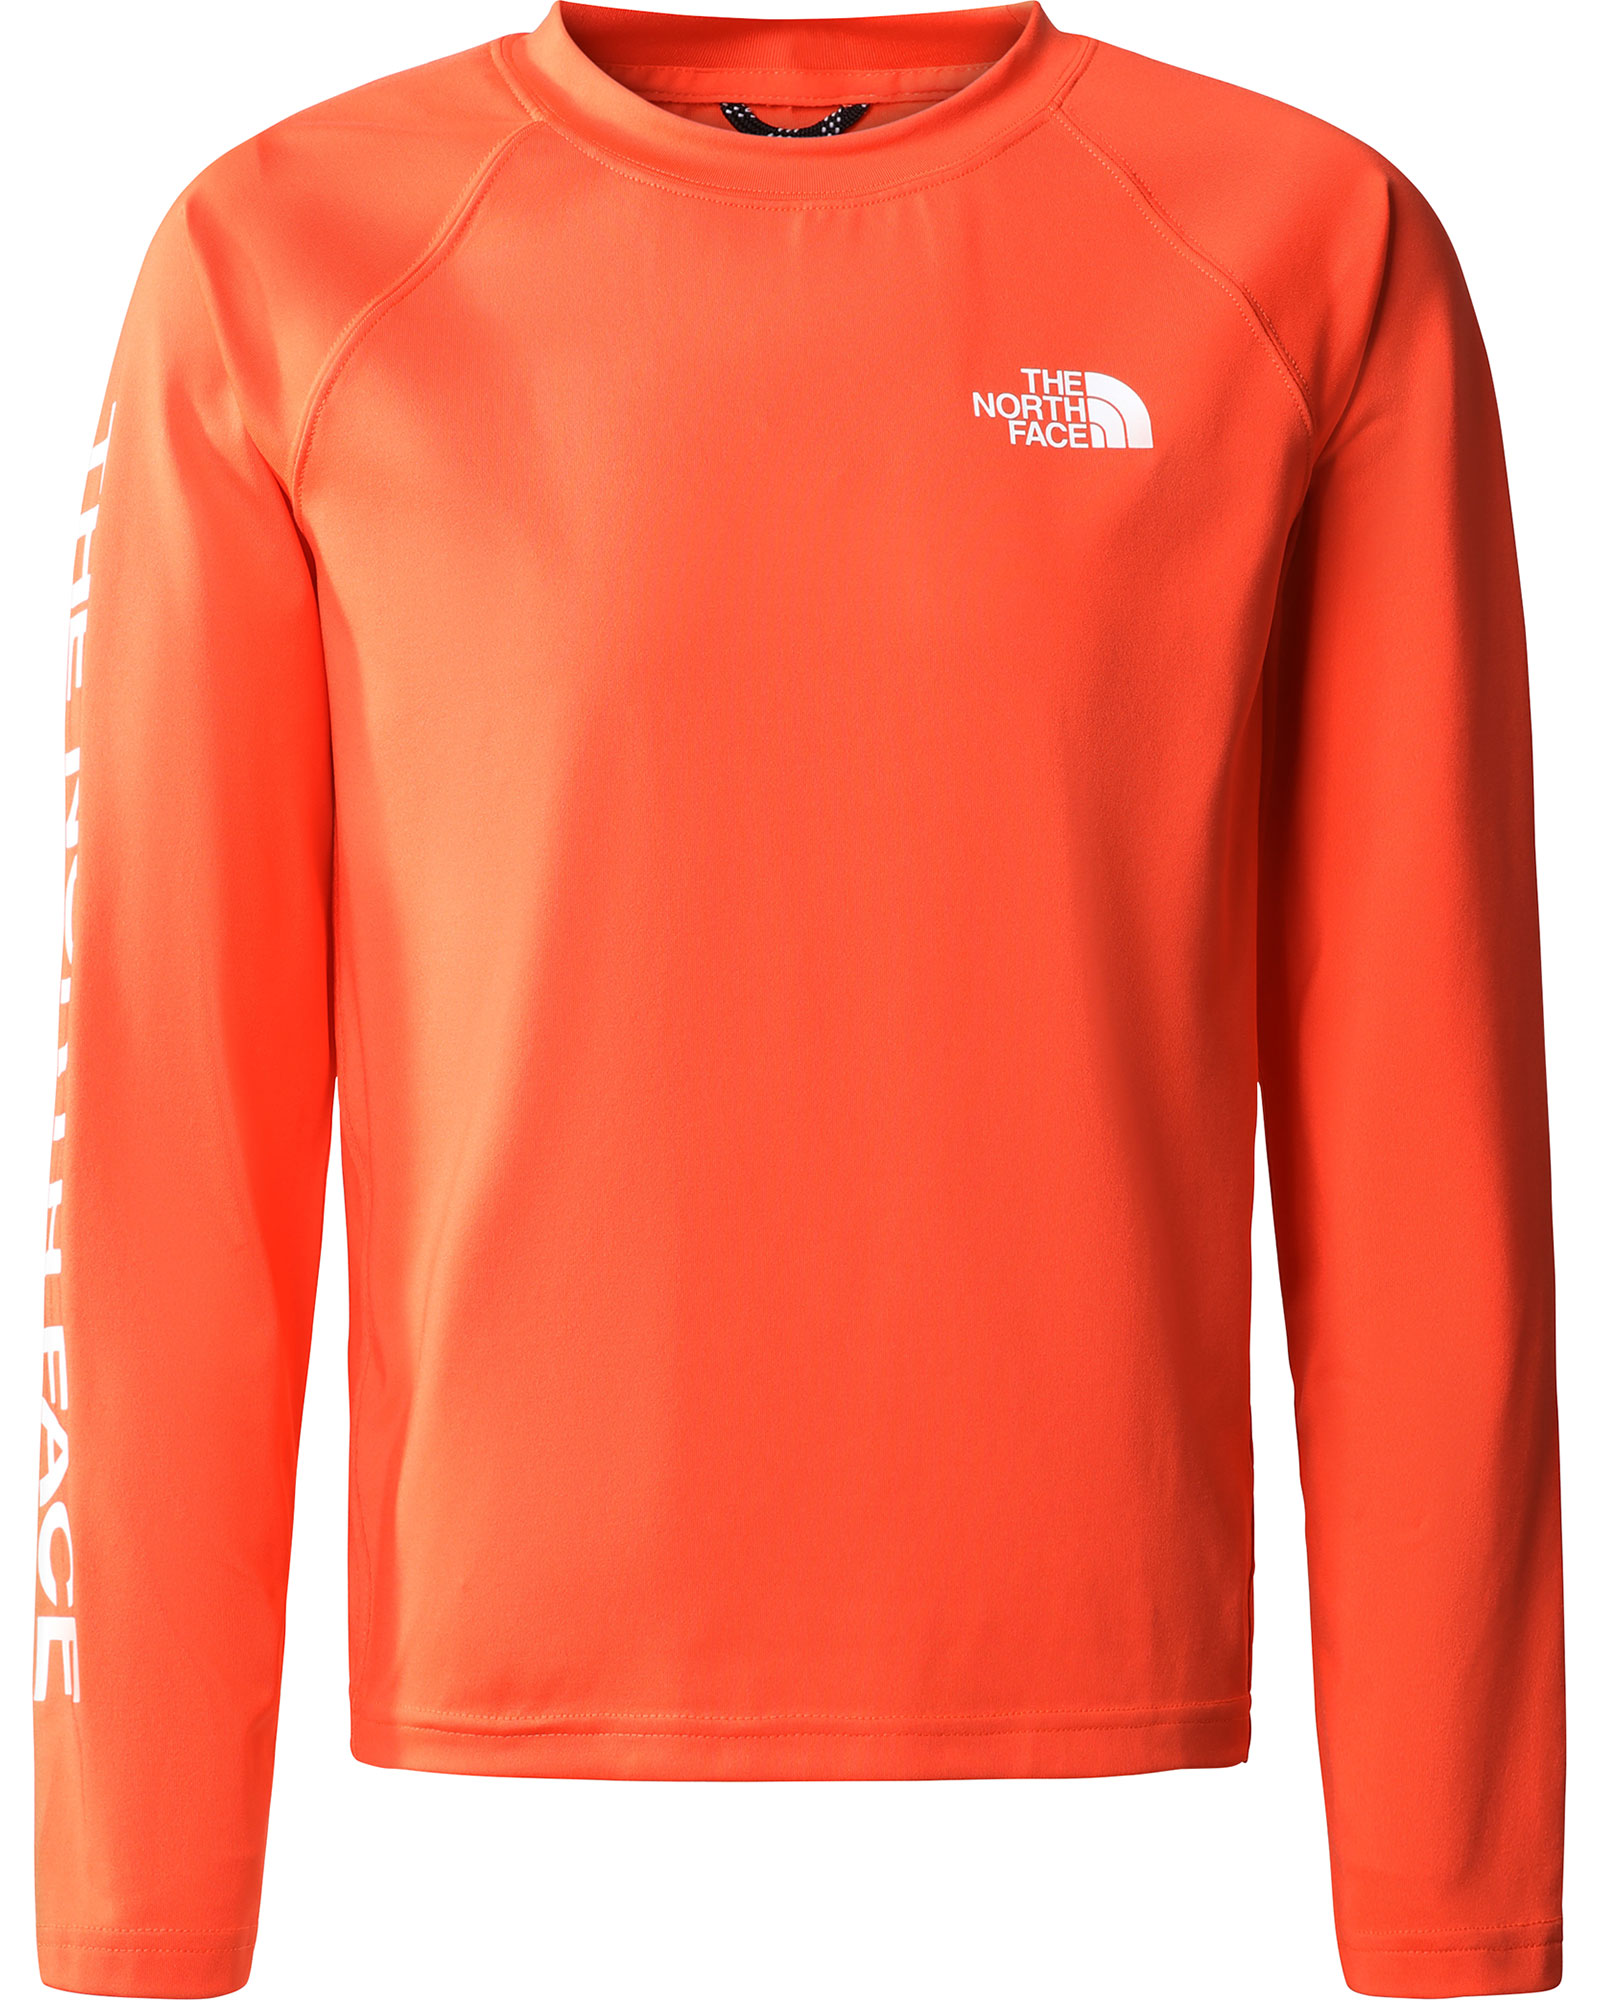 The North Face Boy’s Amphibious Long Sleeved Sun T Shirt - Retro Orange M